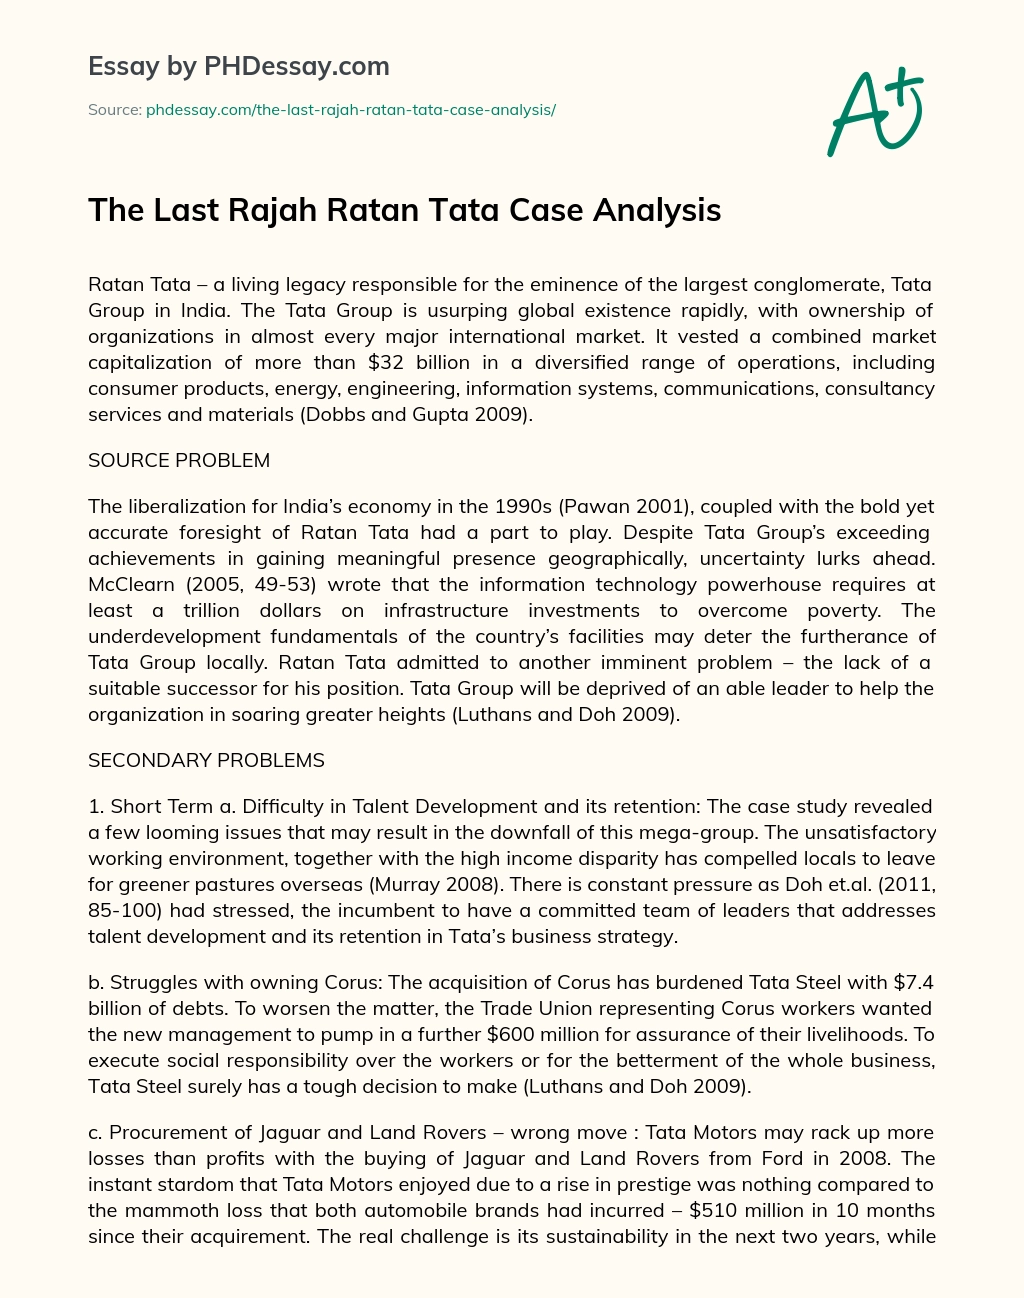 The Last Rajah Ratan Tata Case Analysis essay